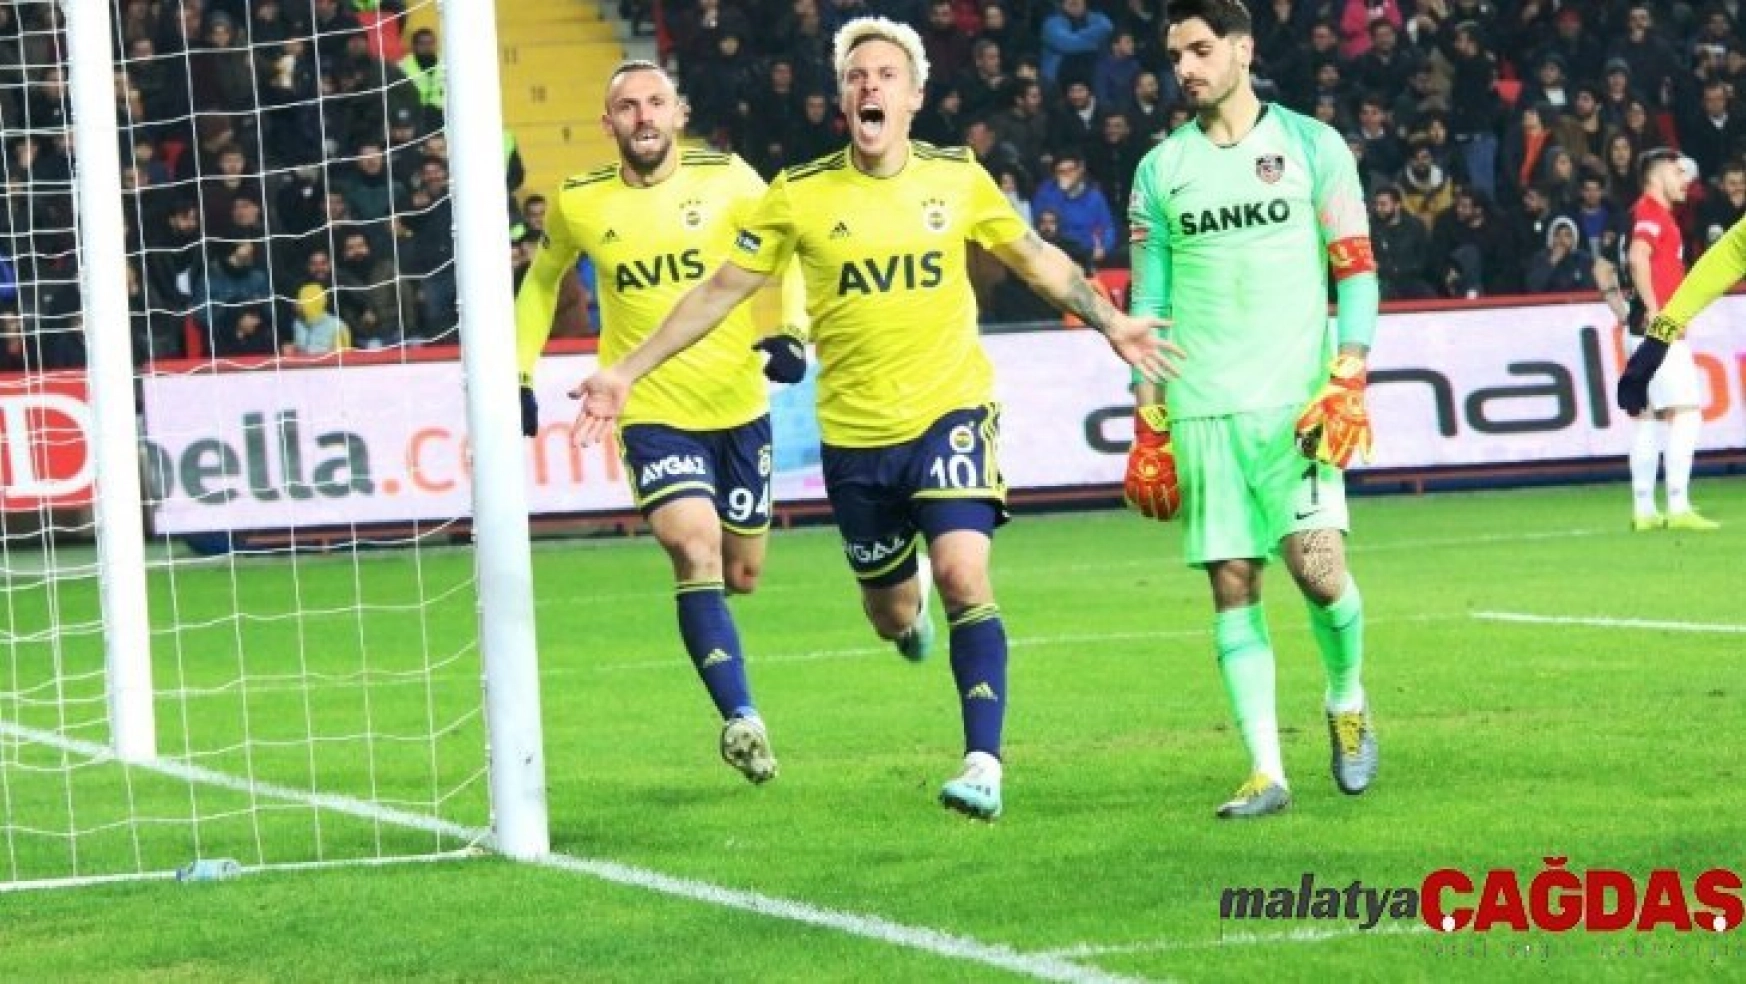 Süper Lig: Gaziantep FK: 0 - Fenerbahçe: 2 (Maç sonucu)